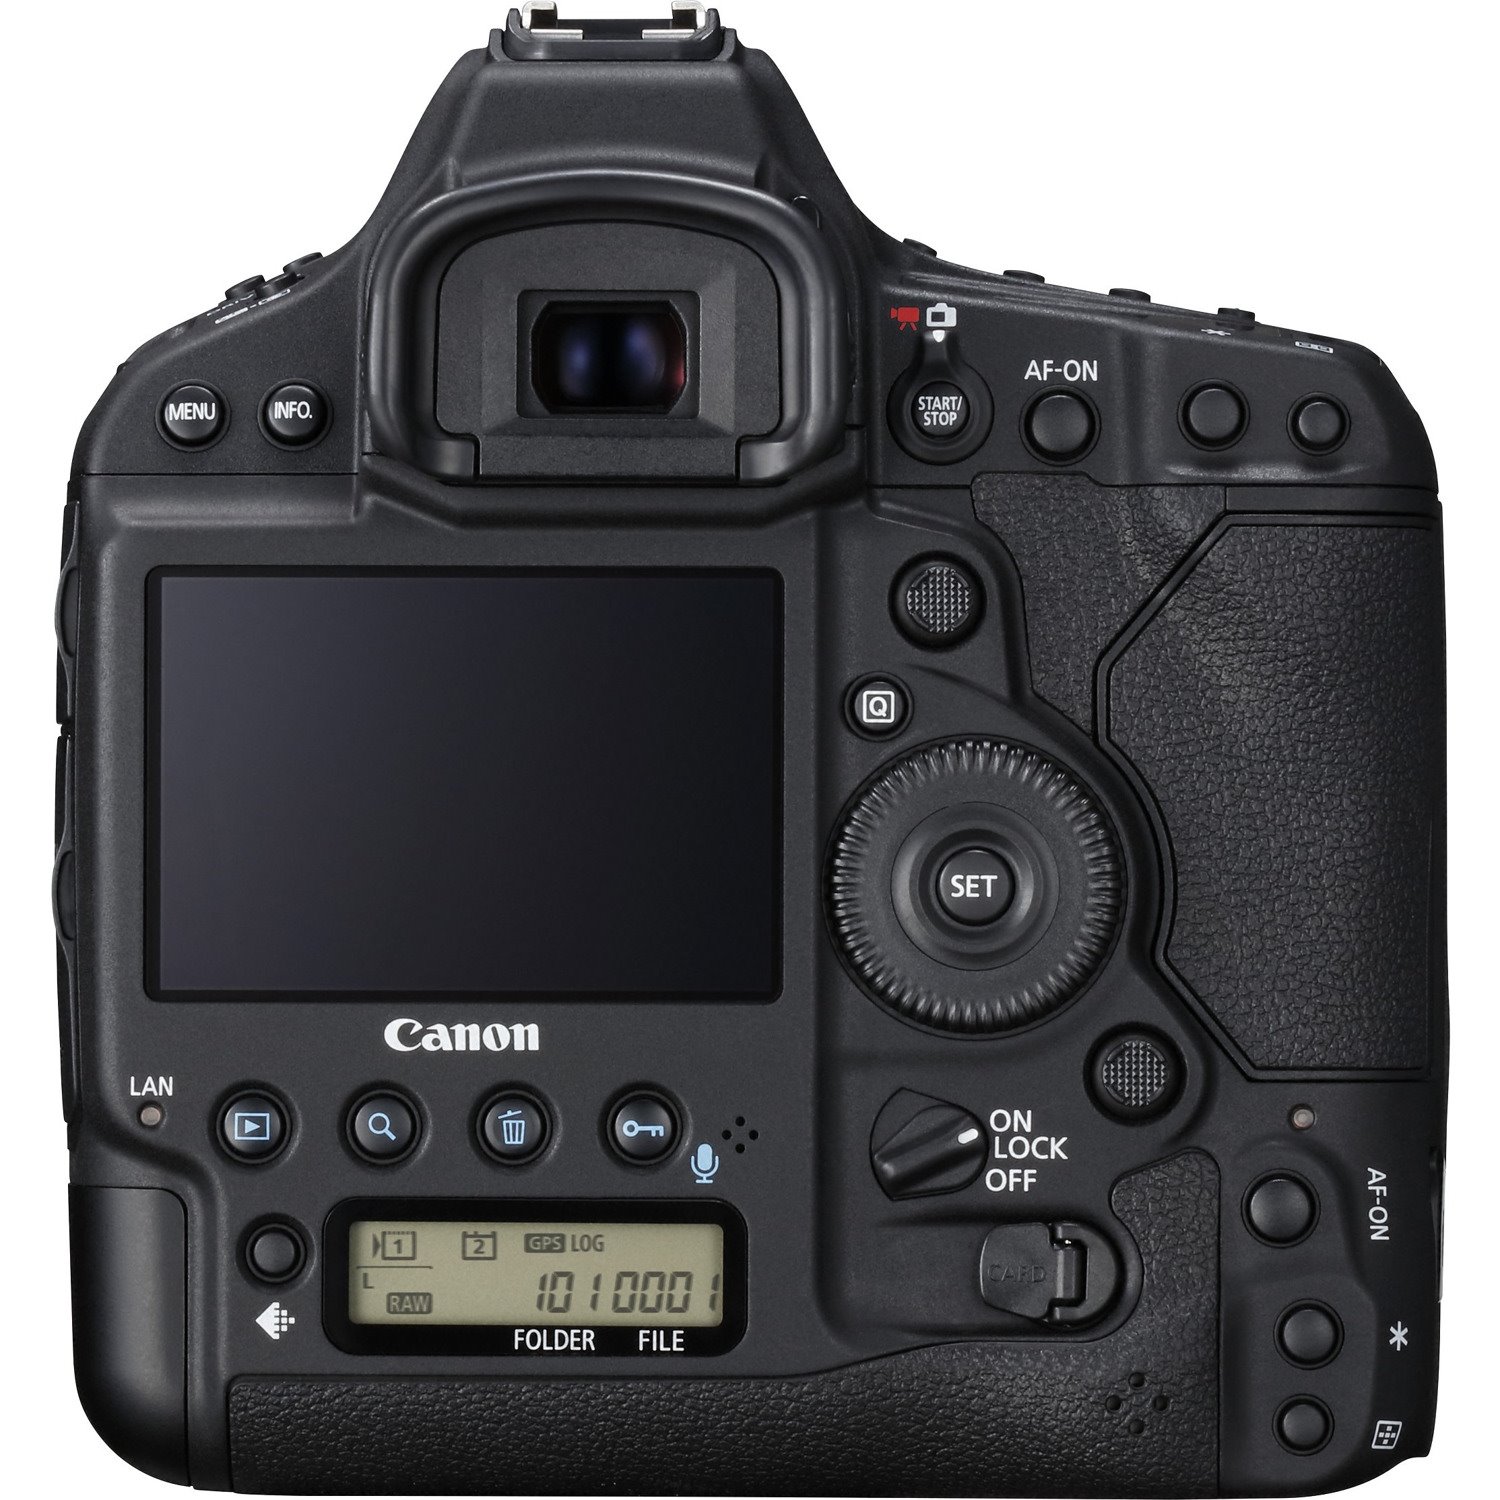 Canon EOS 1D X Mark II 20.2 Megapixel Digital SLR Camera Body Only